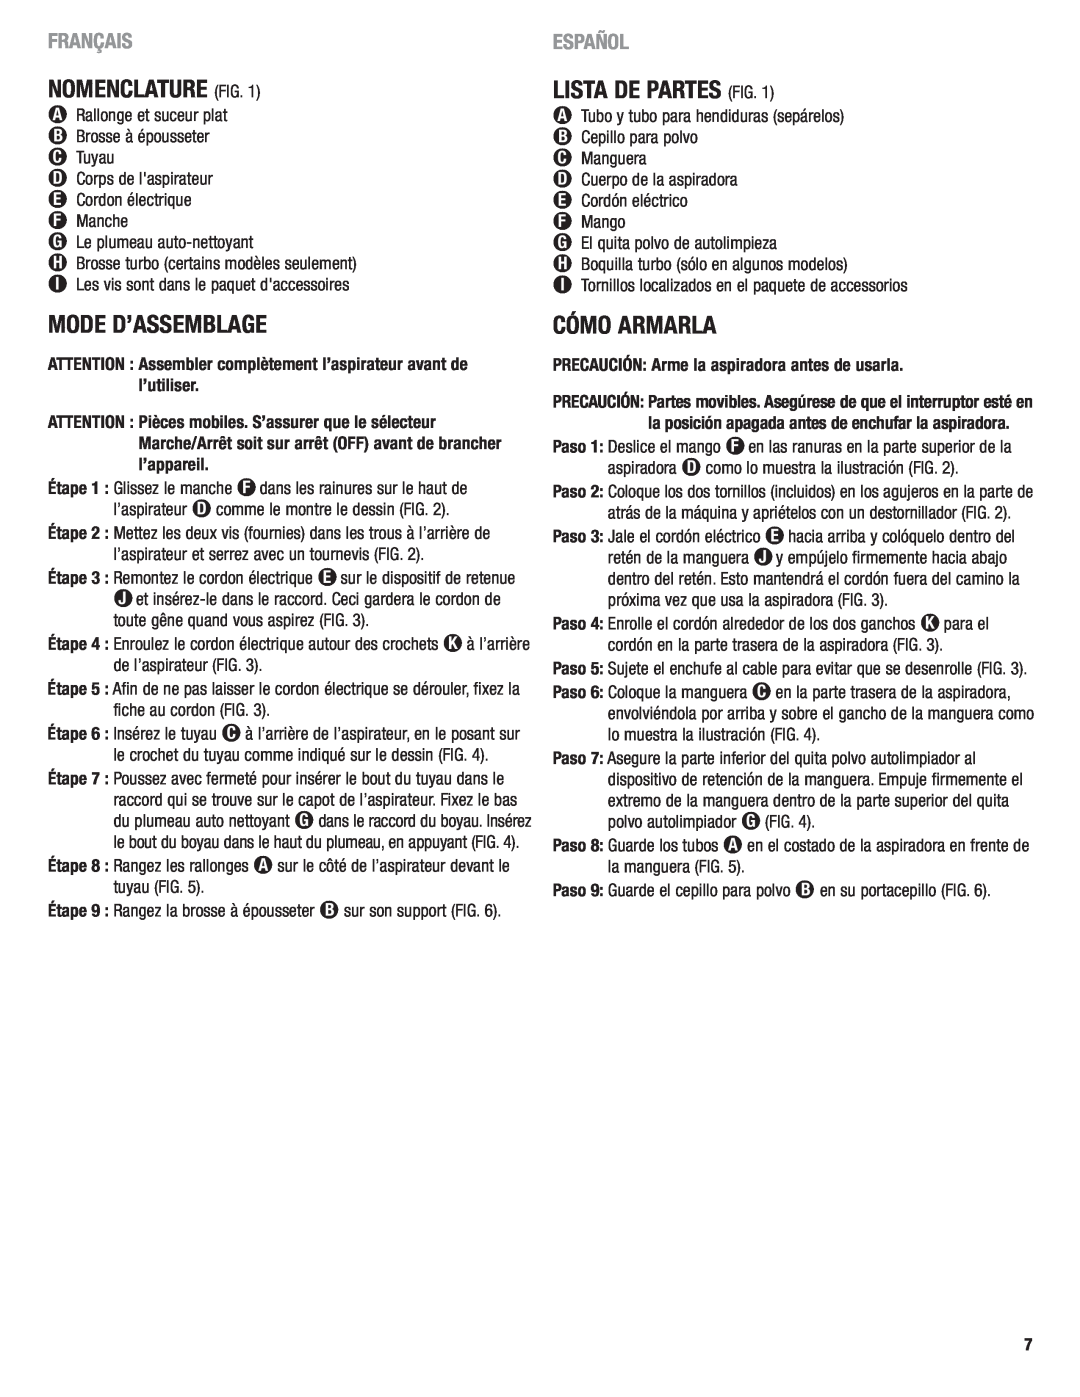 Eureka 2940 manual Nomenclature, Lista De Partes, Mode D’Assemblage, Cómo Armarla, Français, Español 